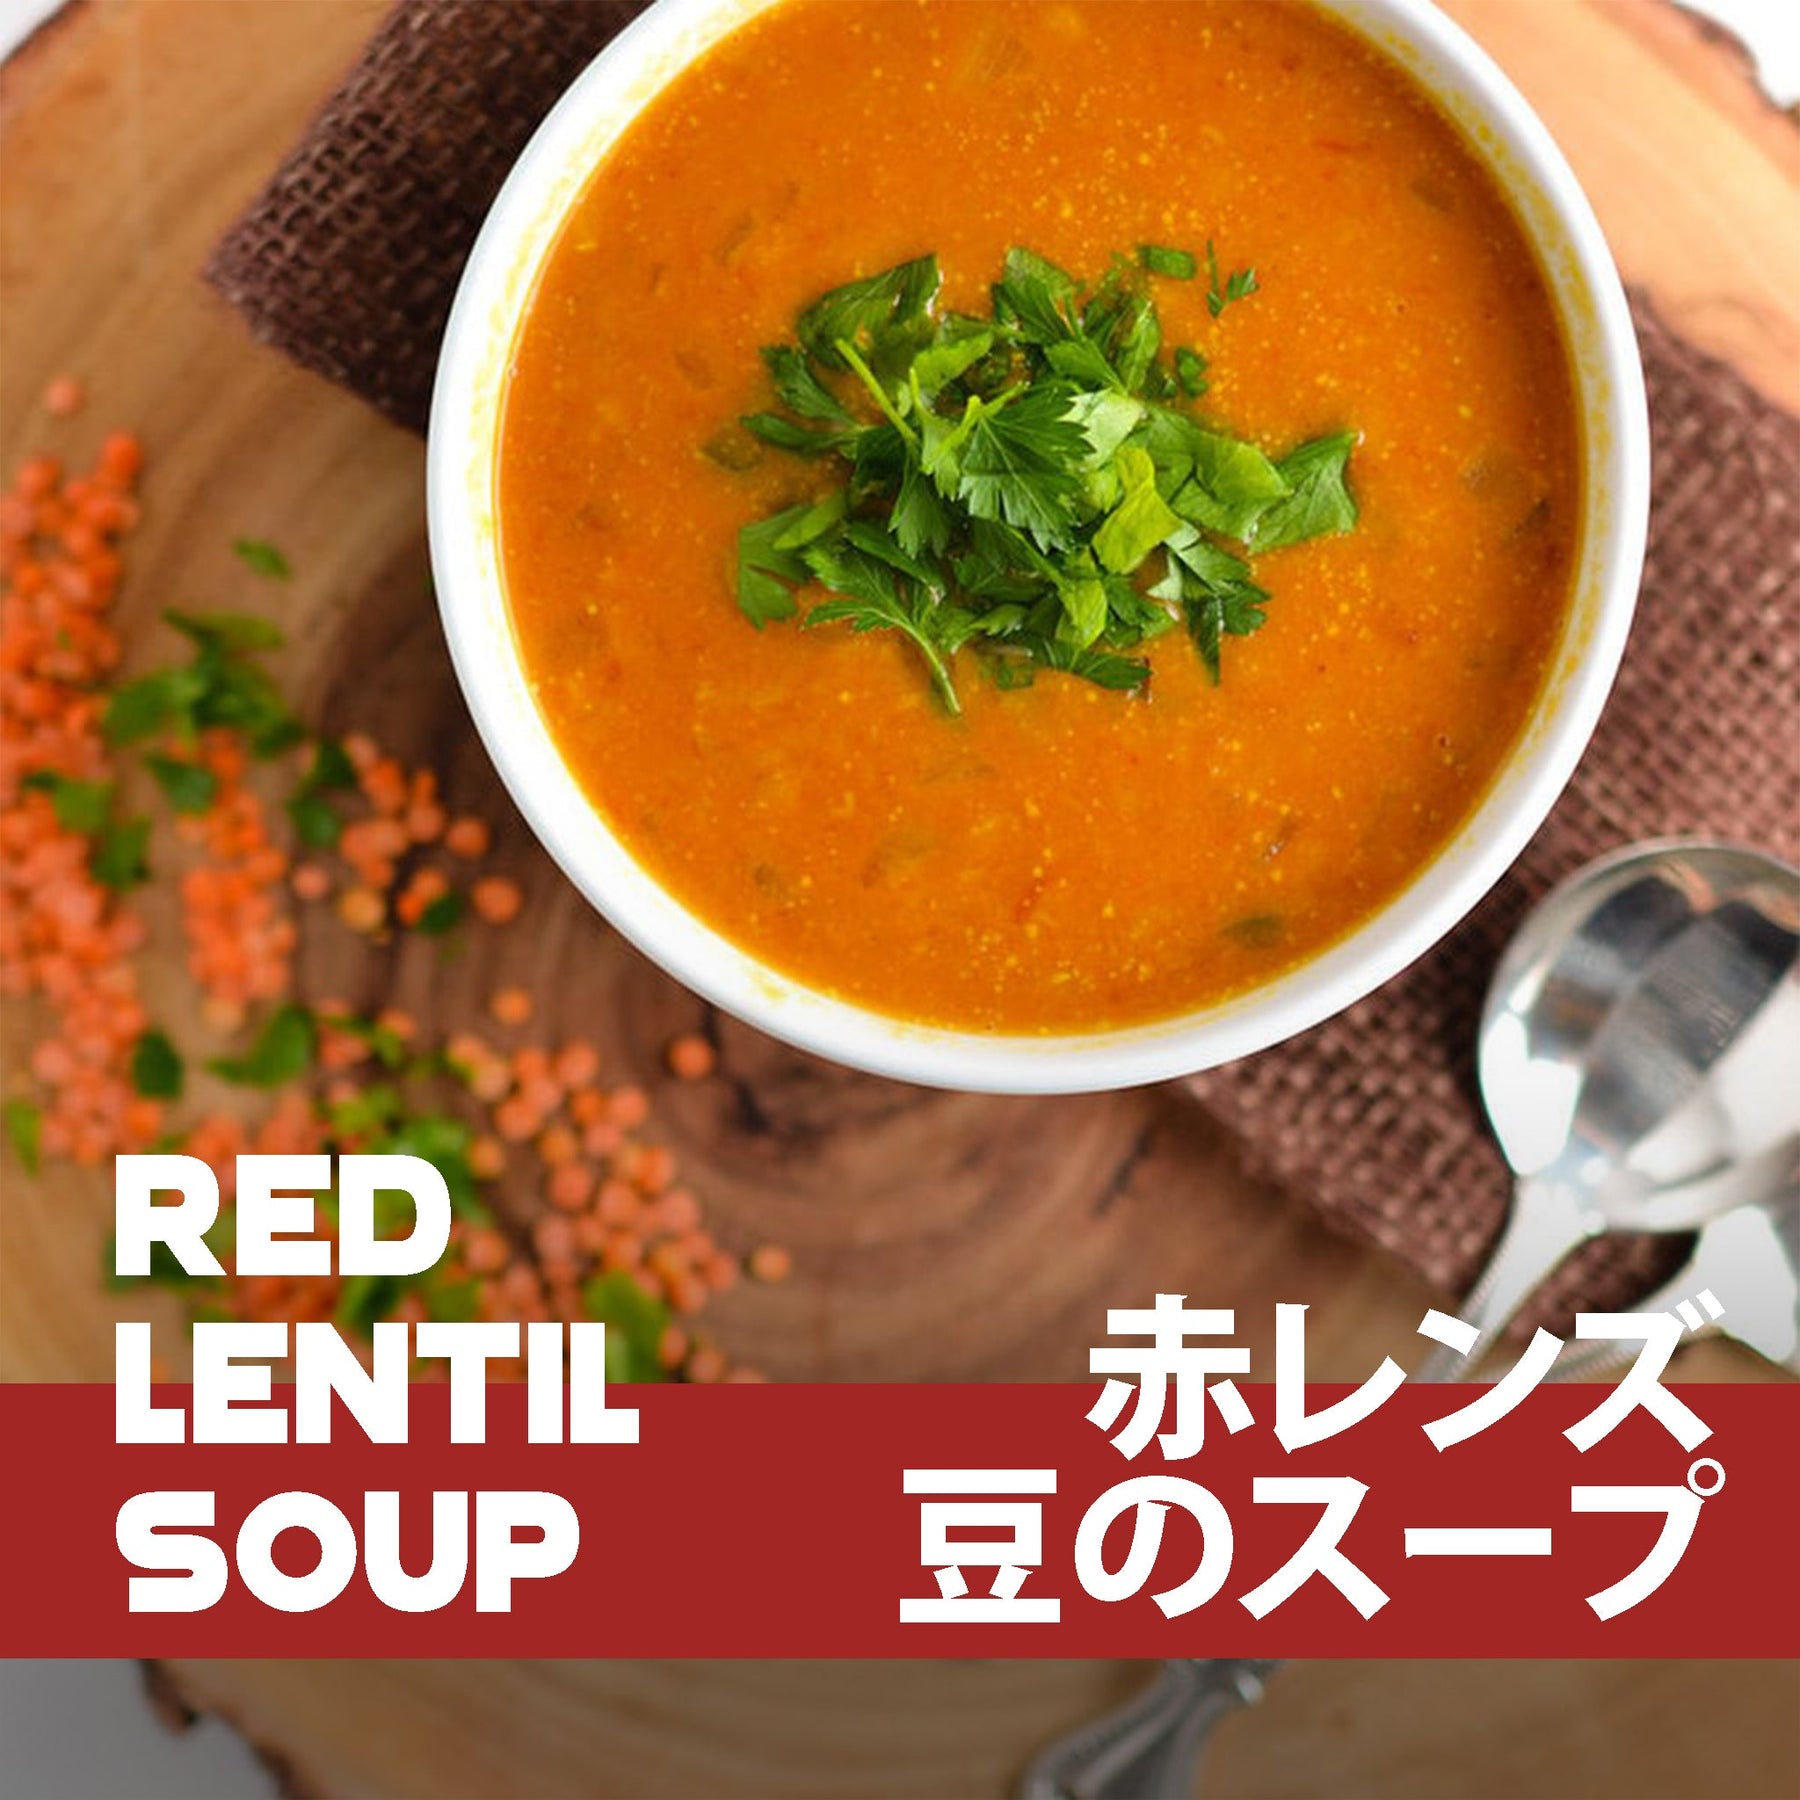 Red Lentil Soup - 赤レンズ豆のスープ - Mercimek - Tokyo Camii Halal Market